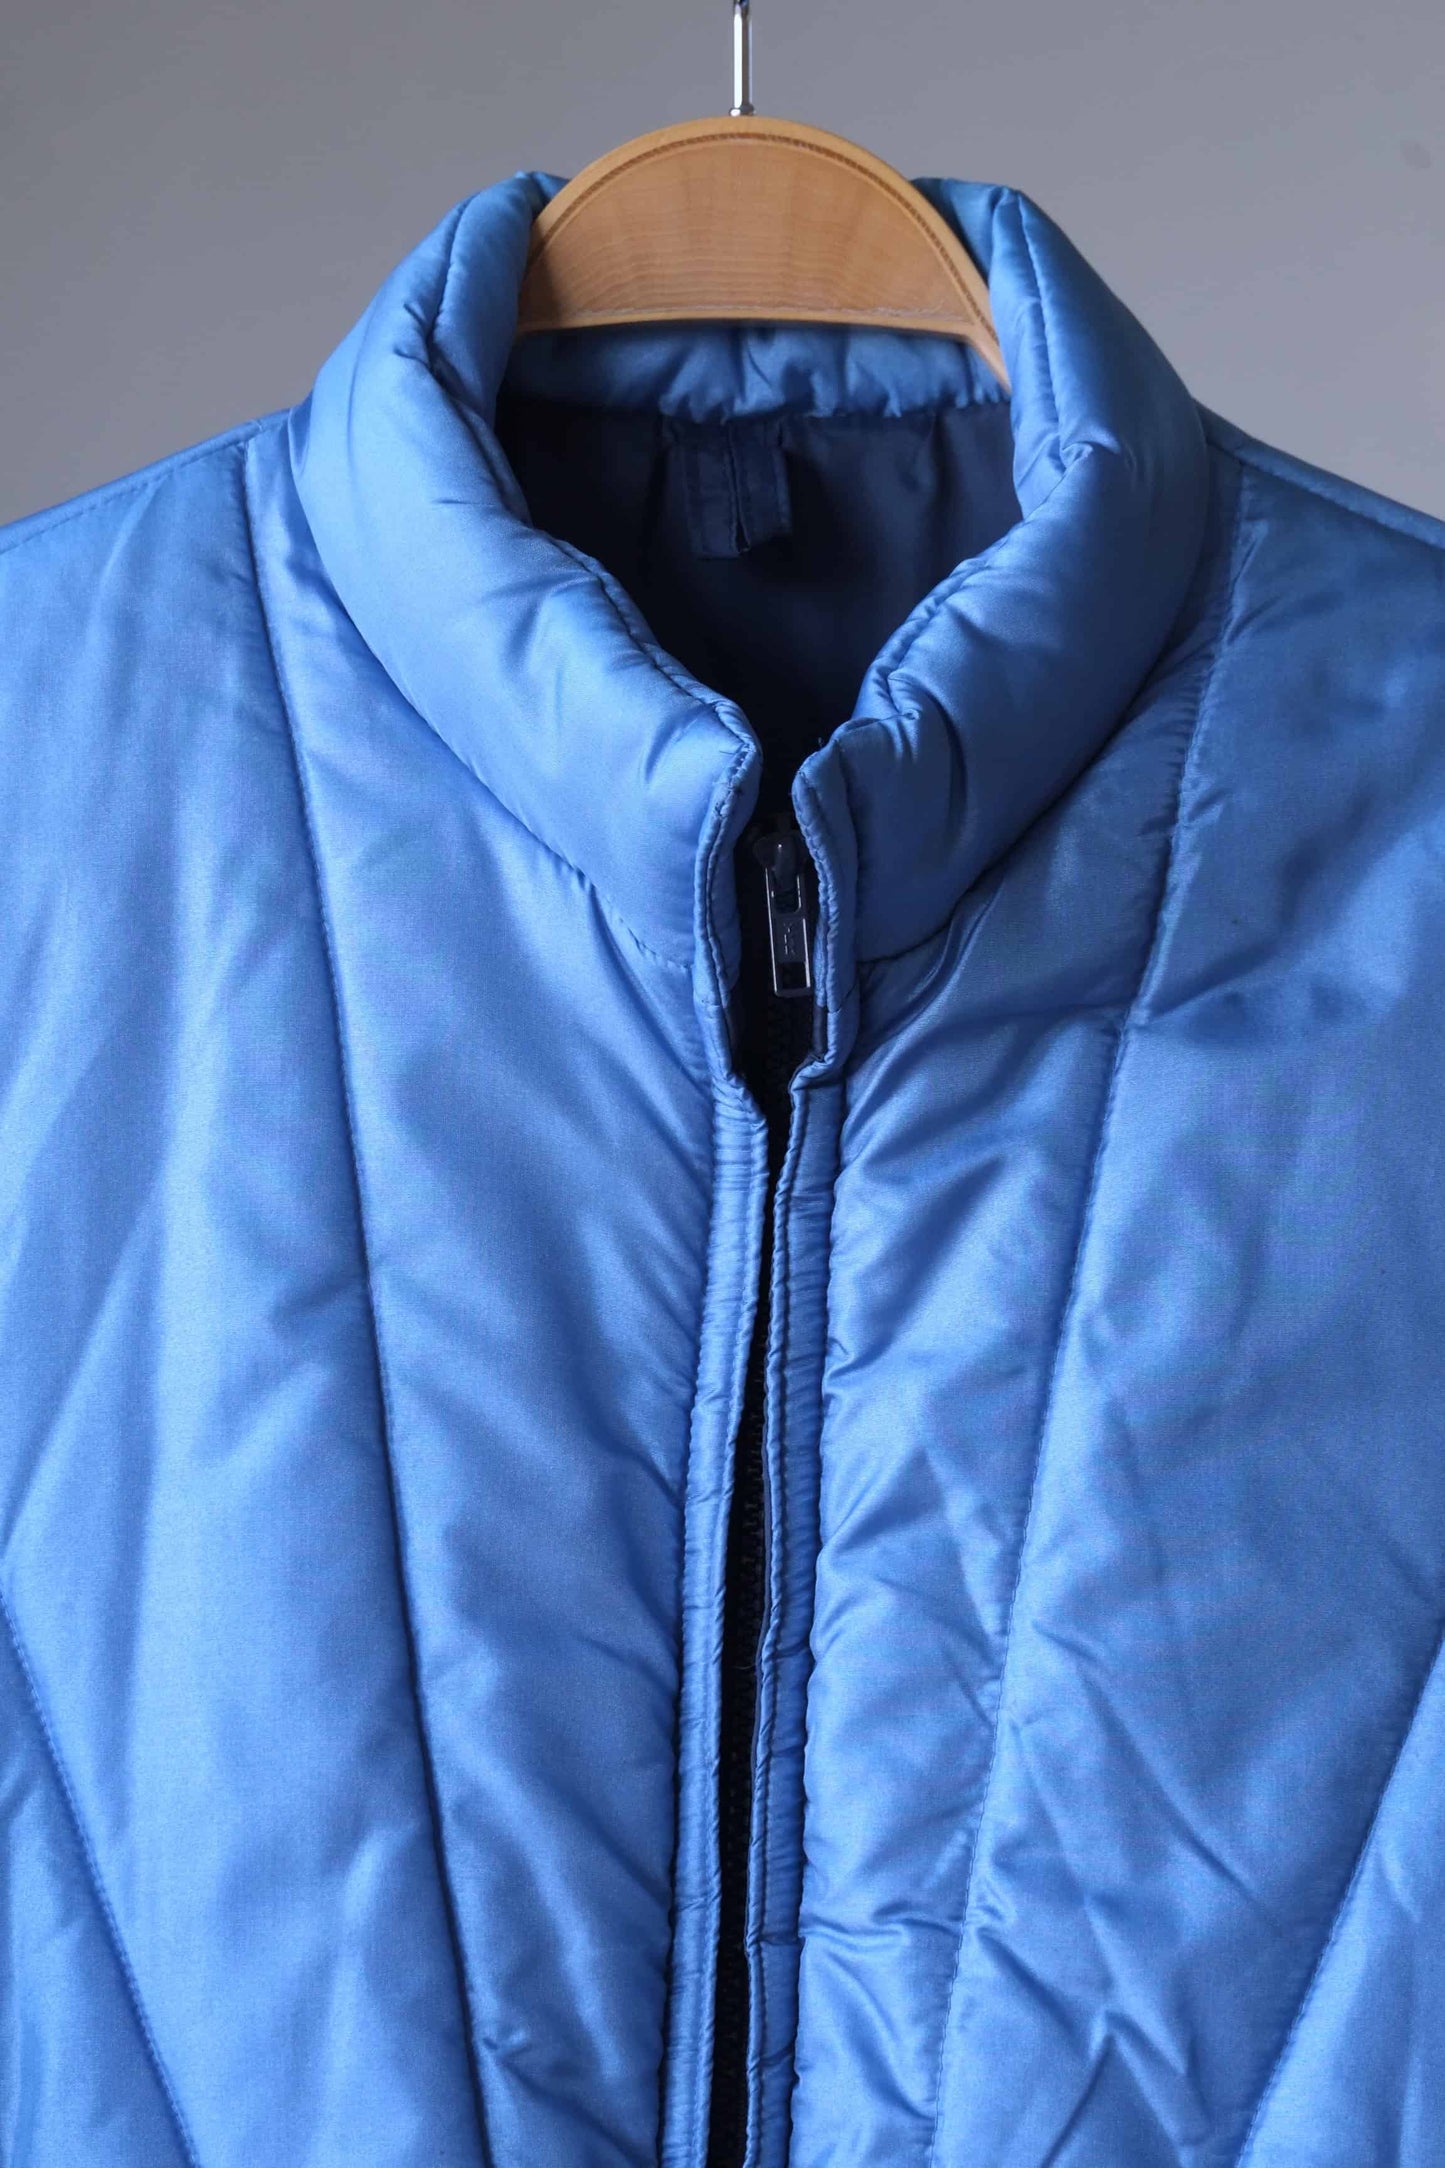 Close up of SANRIVAL Vintage 70's Ski Jacket, color: mettalic blue.